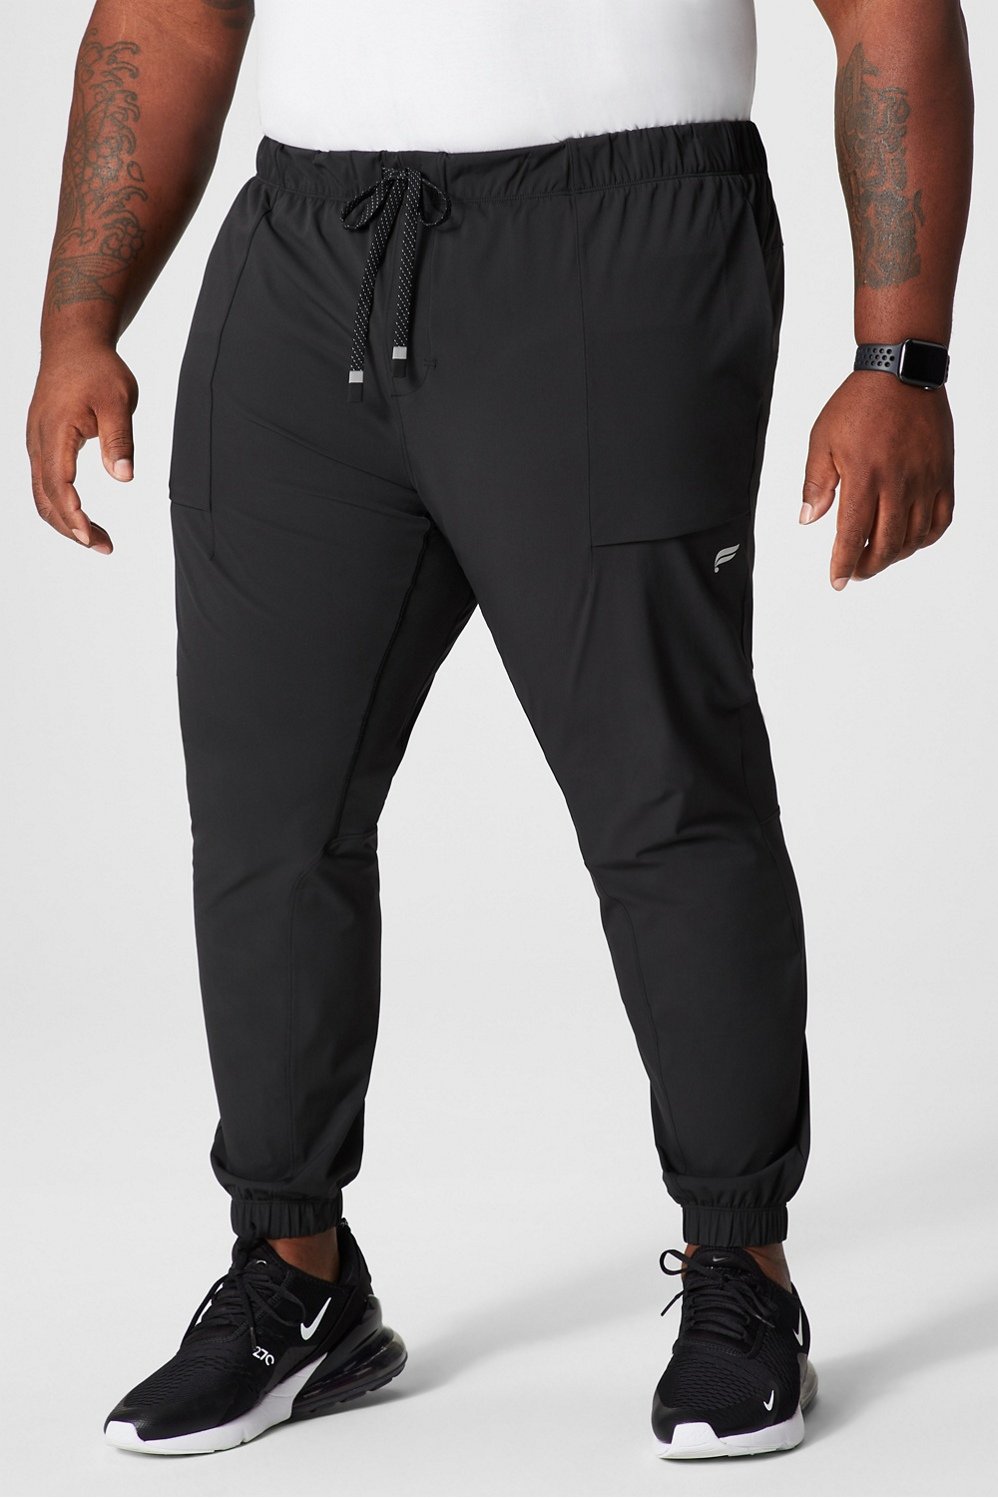 Lonsdale Sports Pants Men's Black Color 110786 from Gaponez Sport Gear